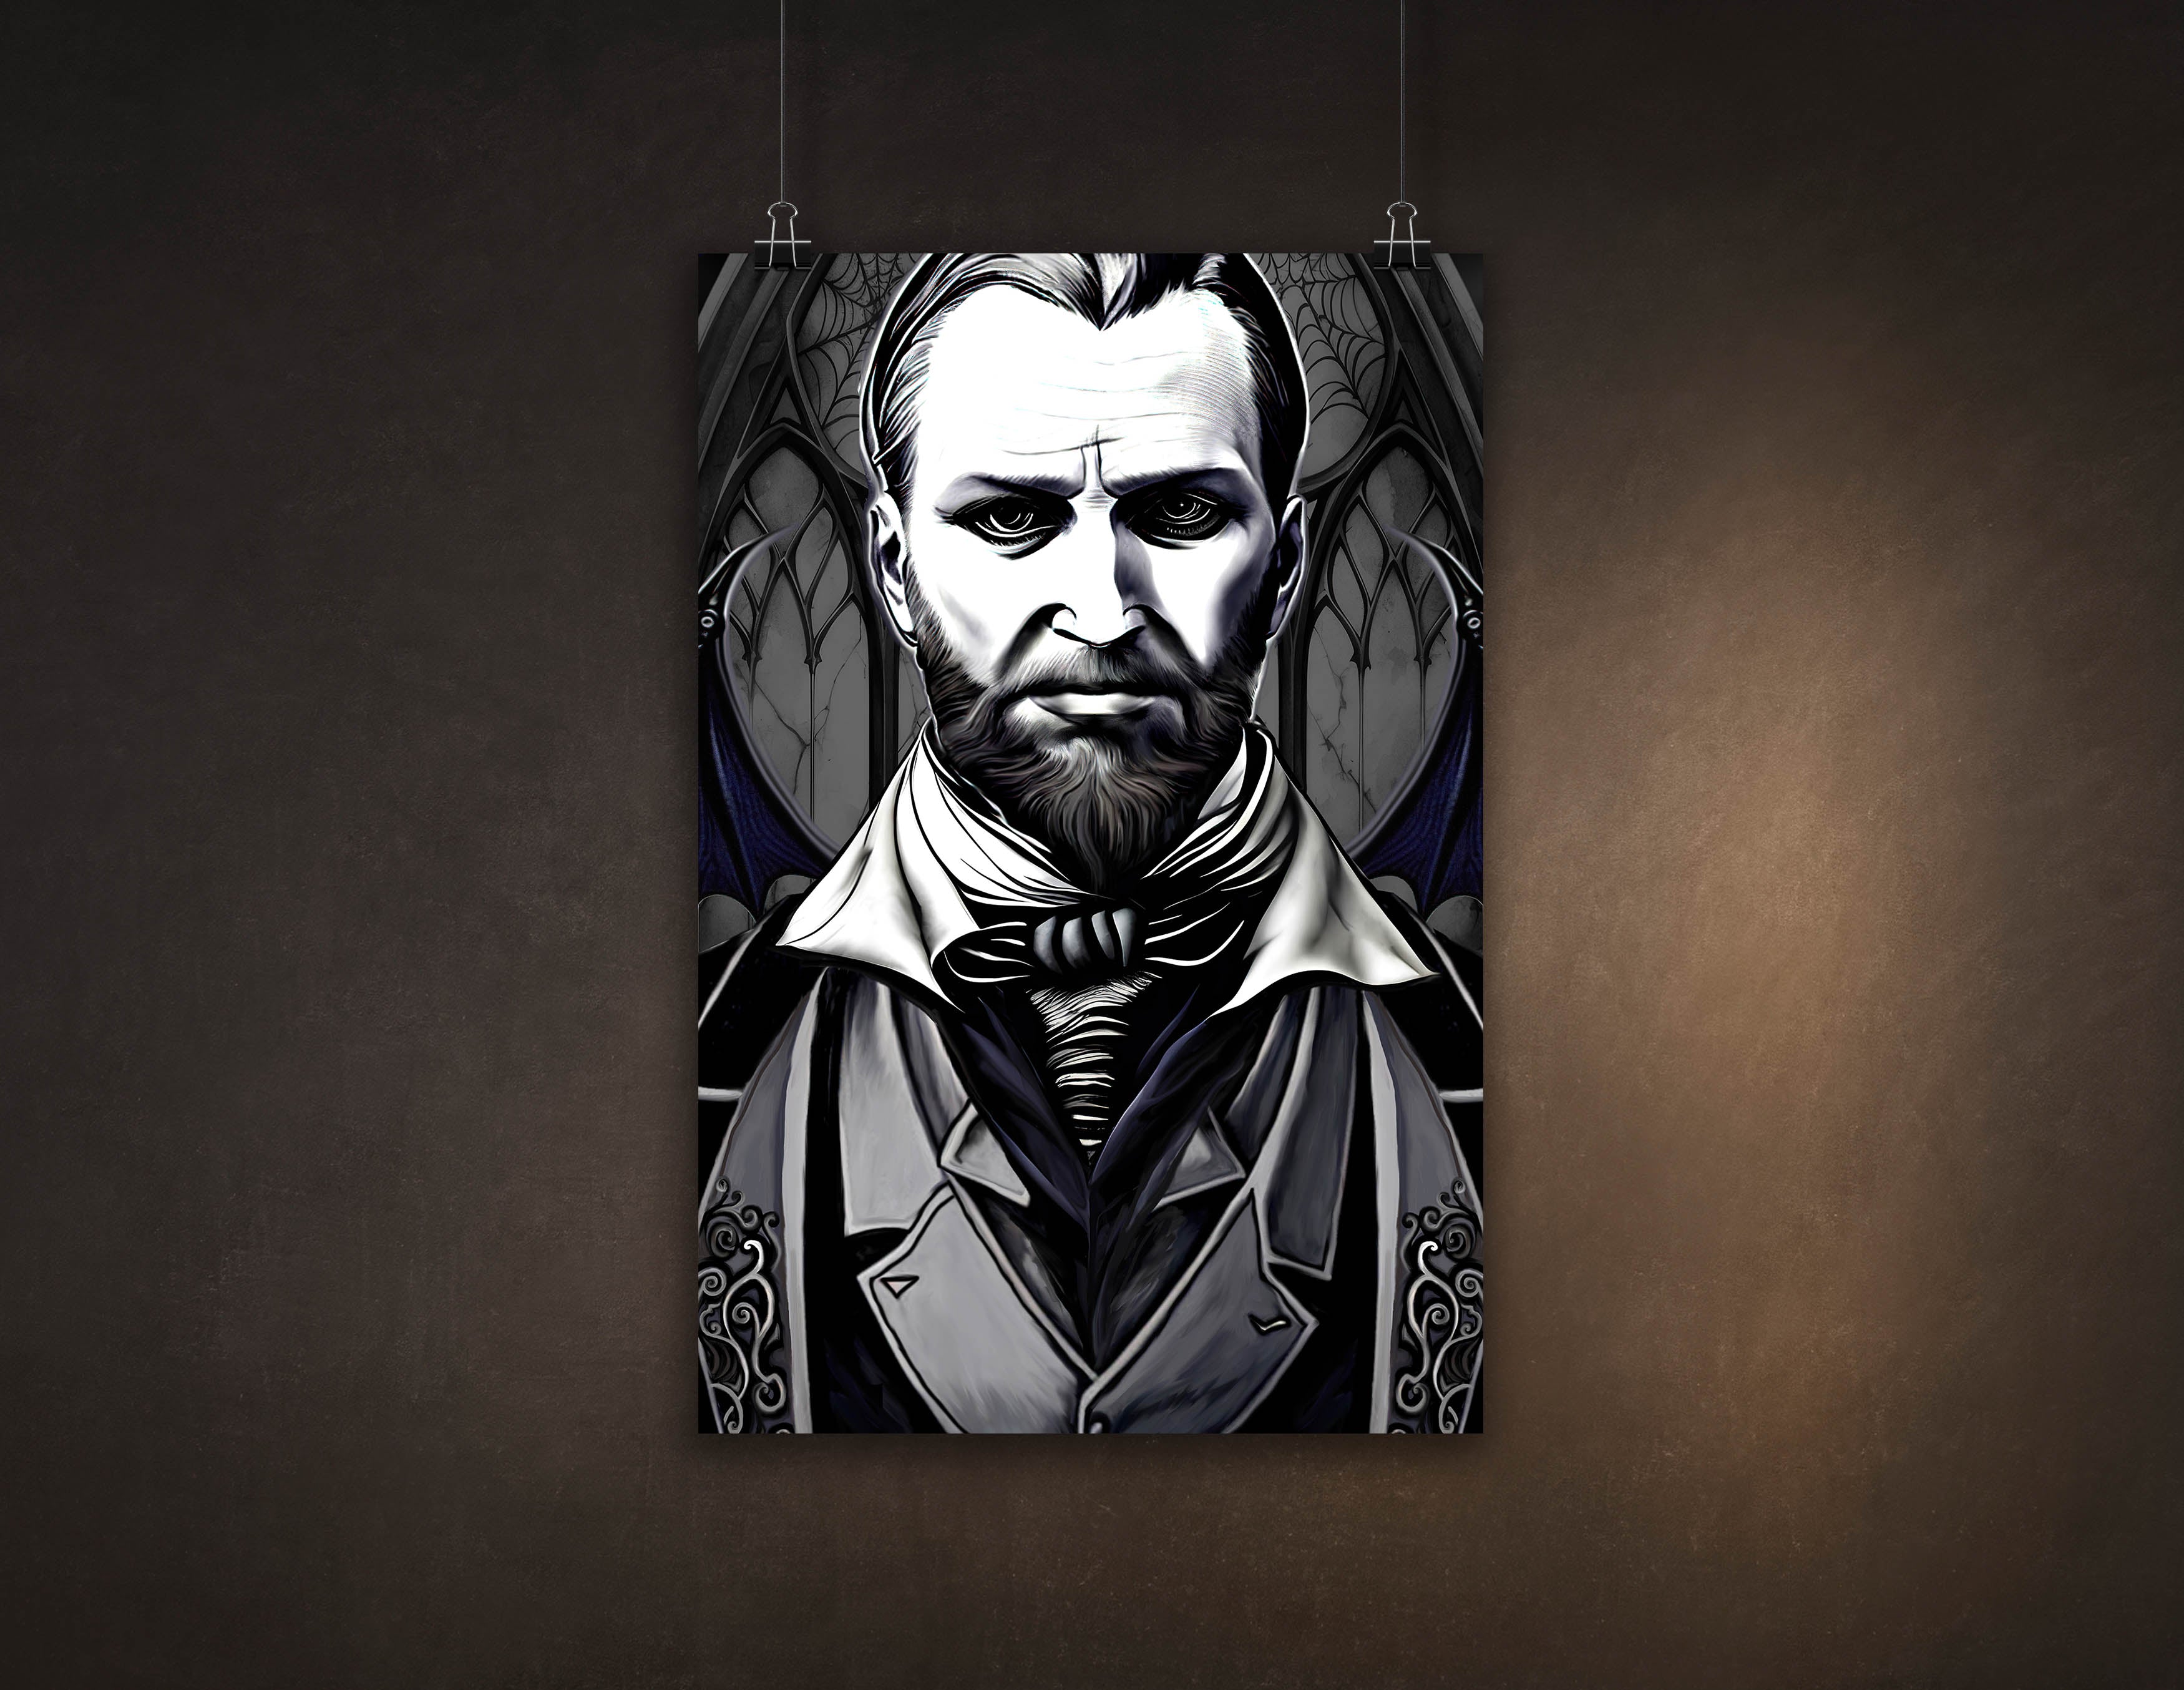 Bram Stoker, Illustrated Gothic Portrait, Gothic Art, Digital Poster/Print, Available in Multiple Sizes